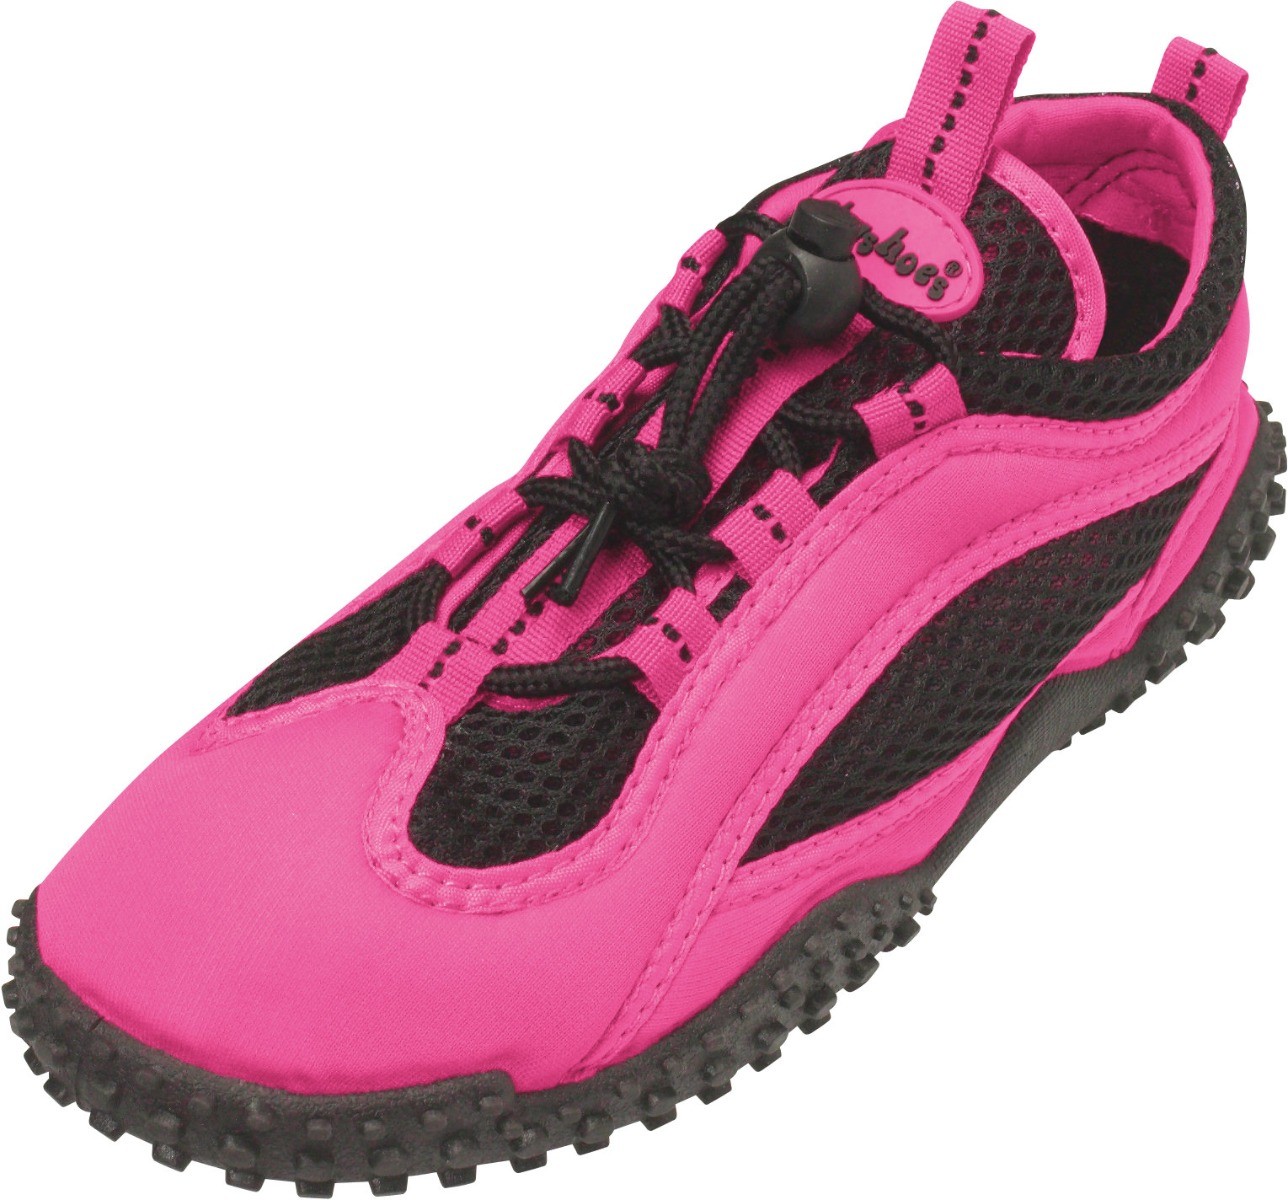 Playshoes - UV Kids Beachshoes - Pink Neon